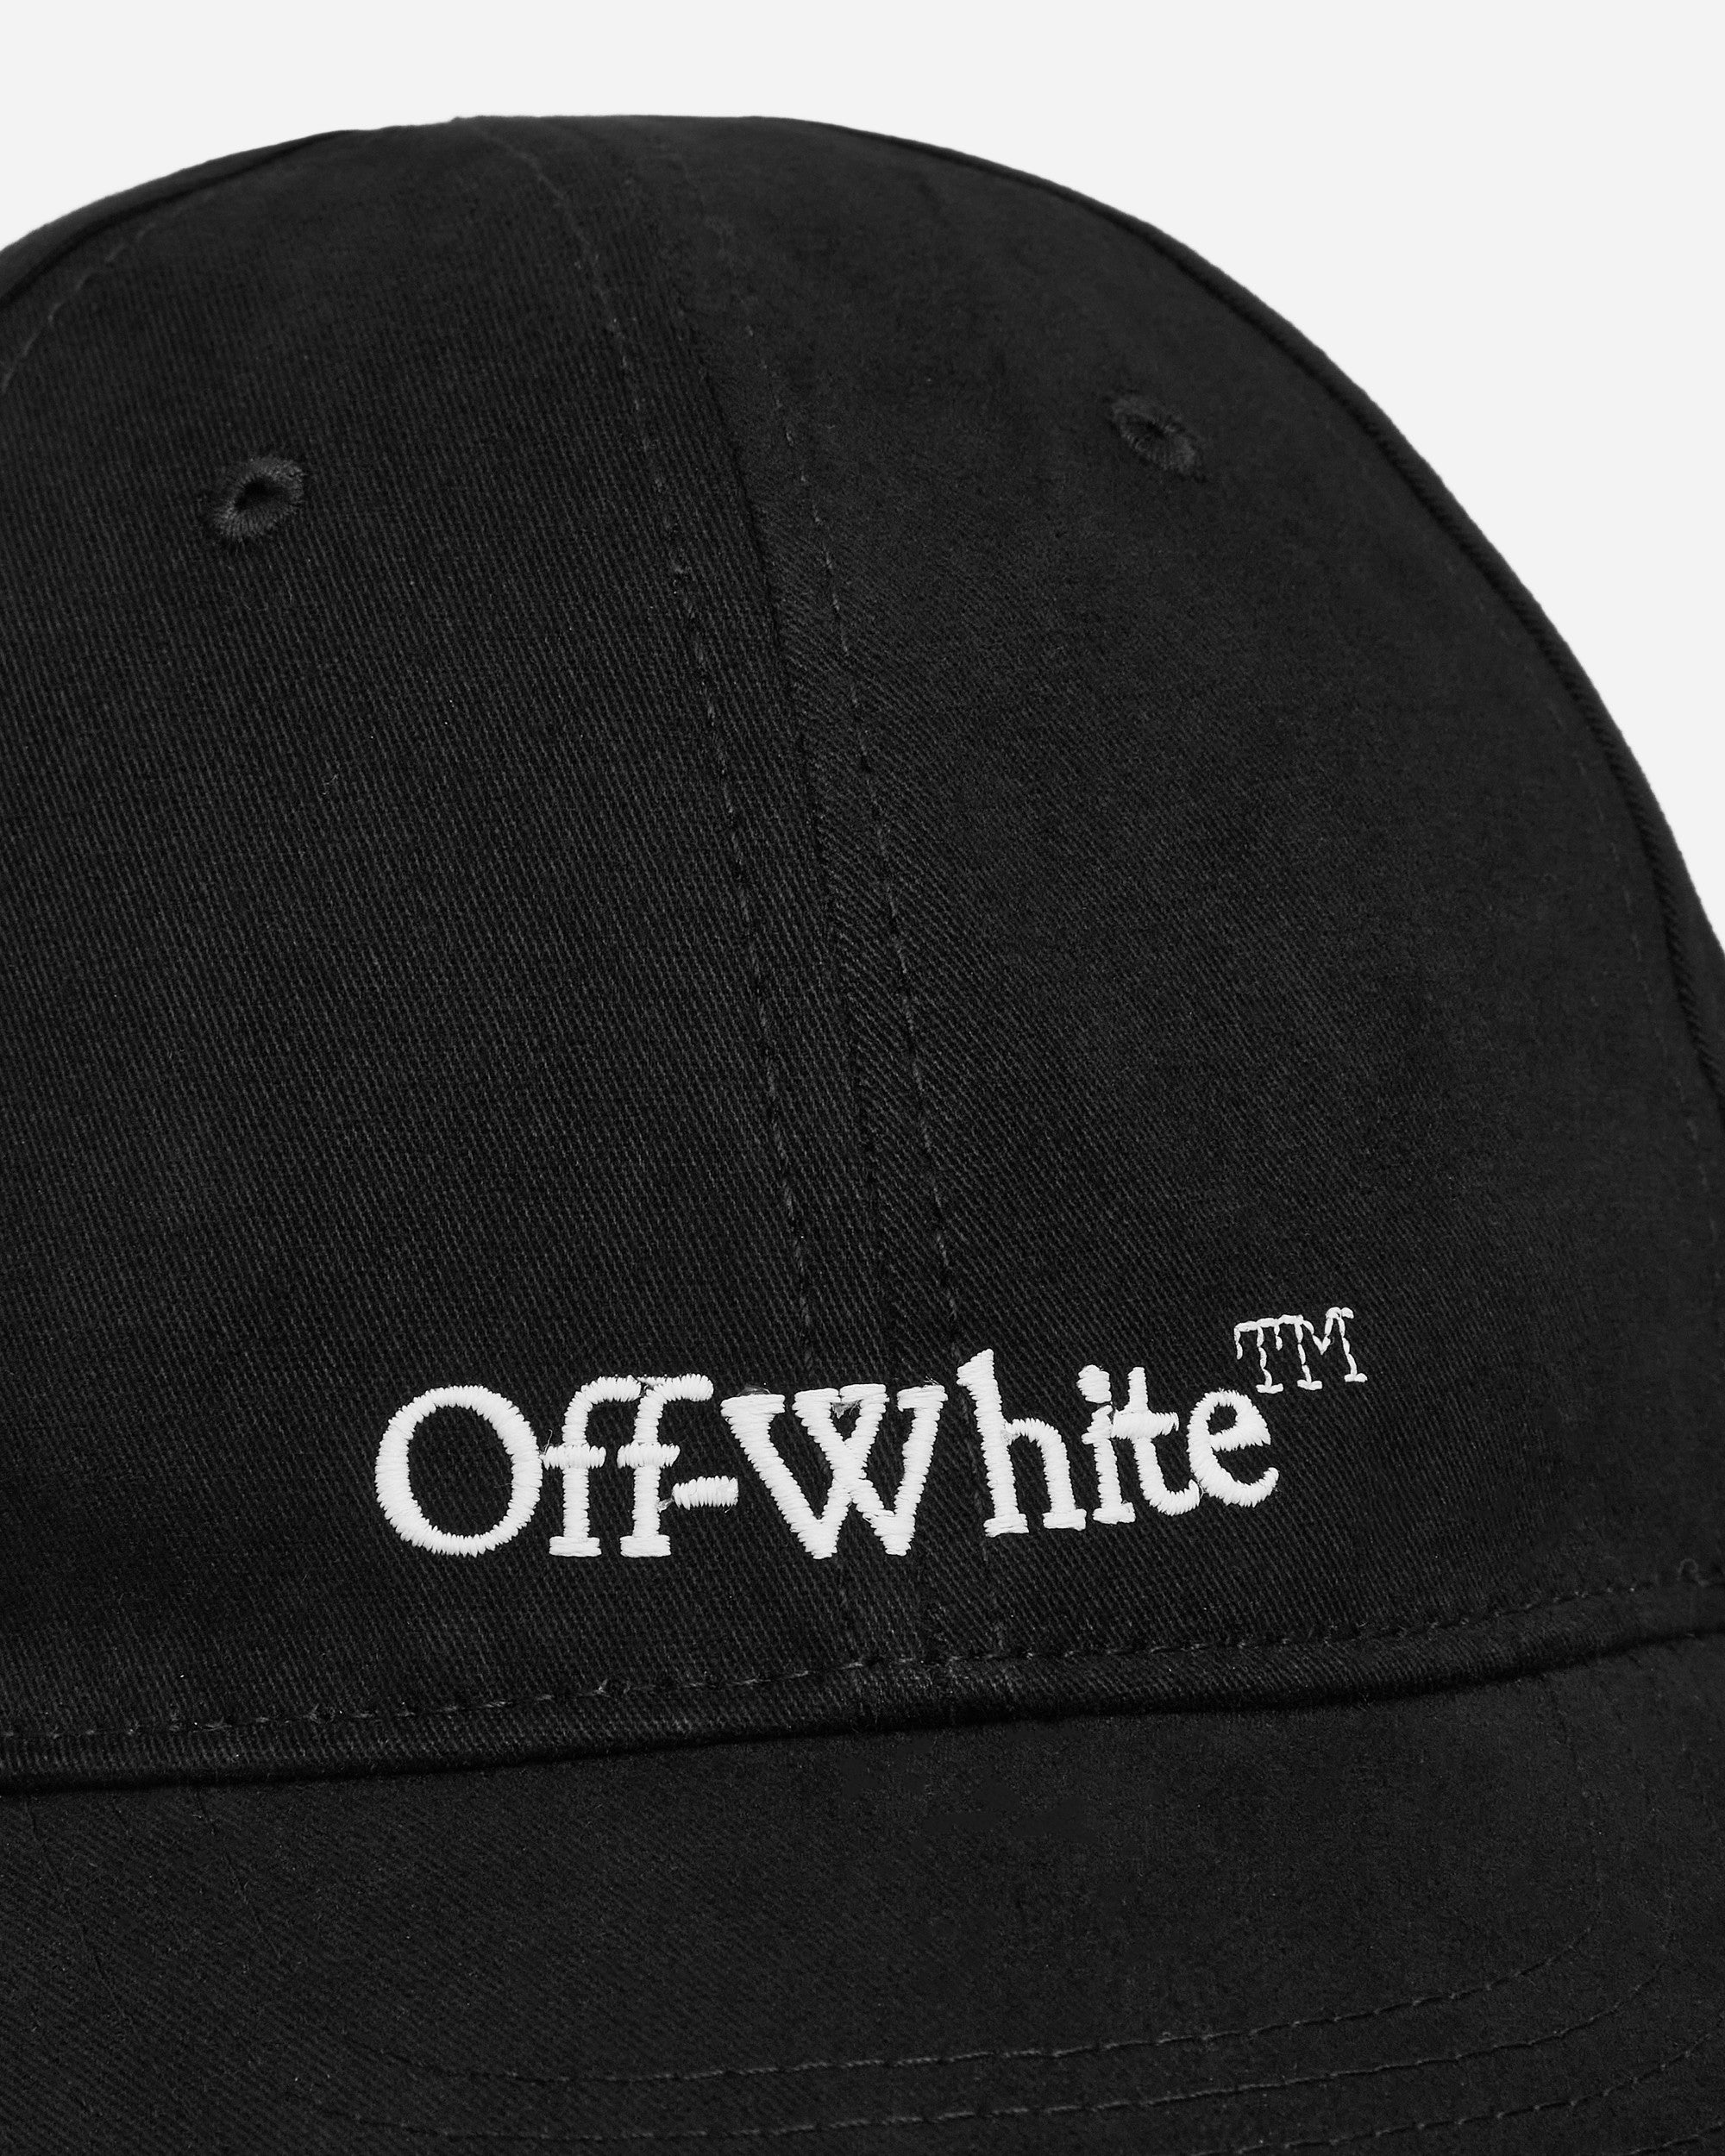 Off-White Bookish Basebakll Cap Black/White Hats Caps OMLB041C99FAB004 1001